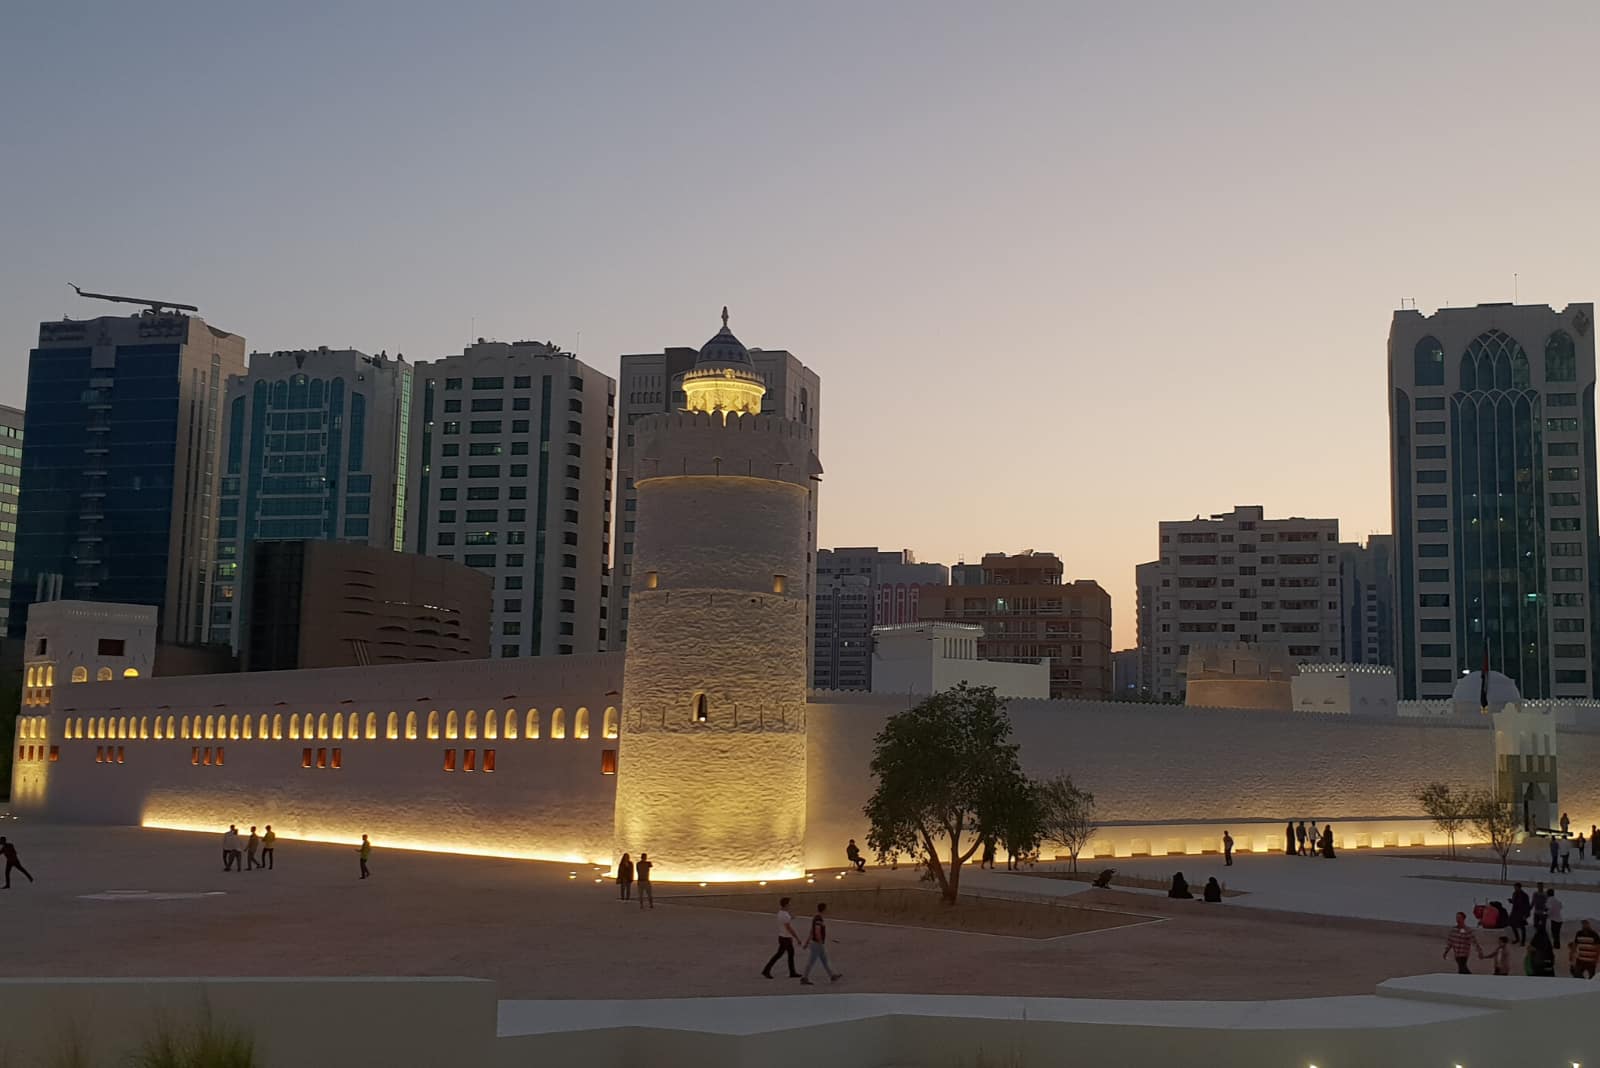 QASR AL HOSN – ABU DHABI, UAE